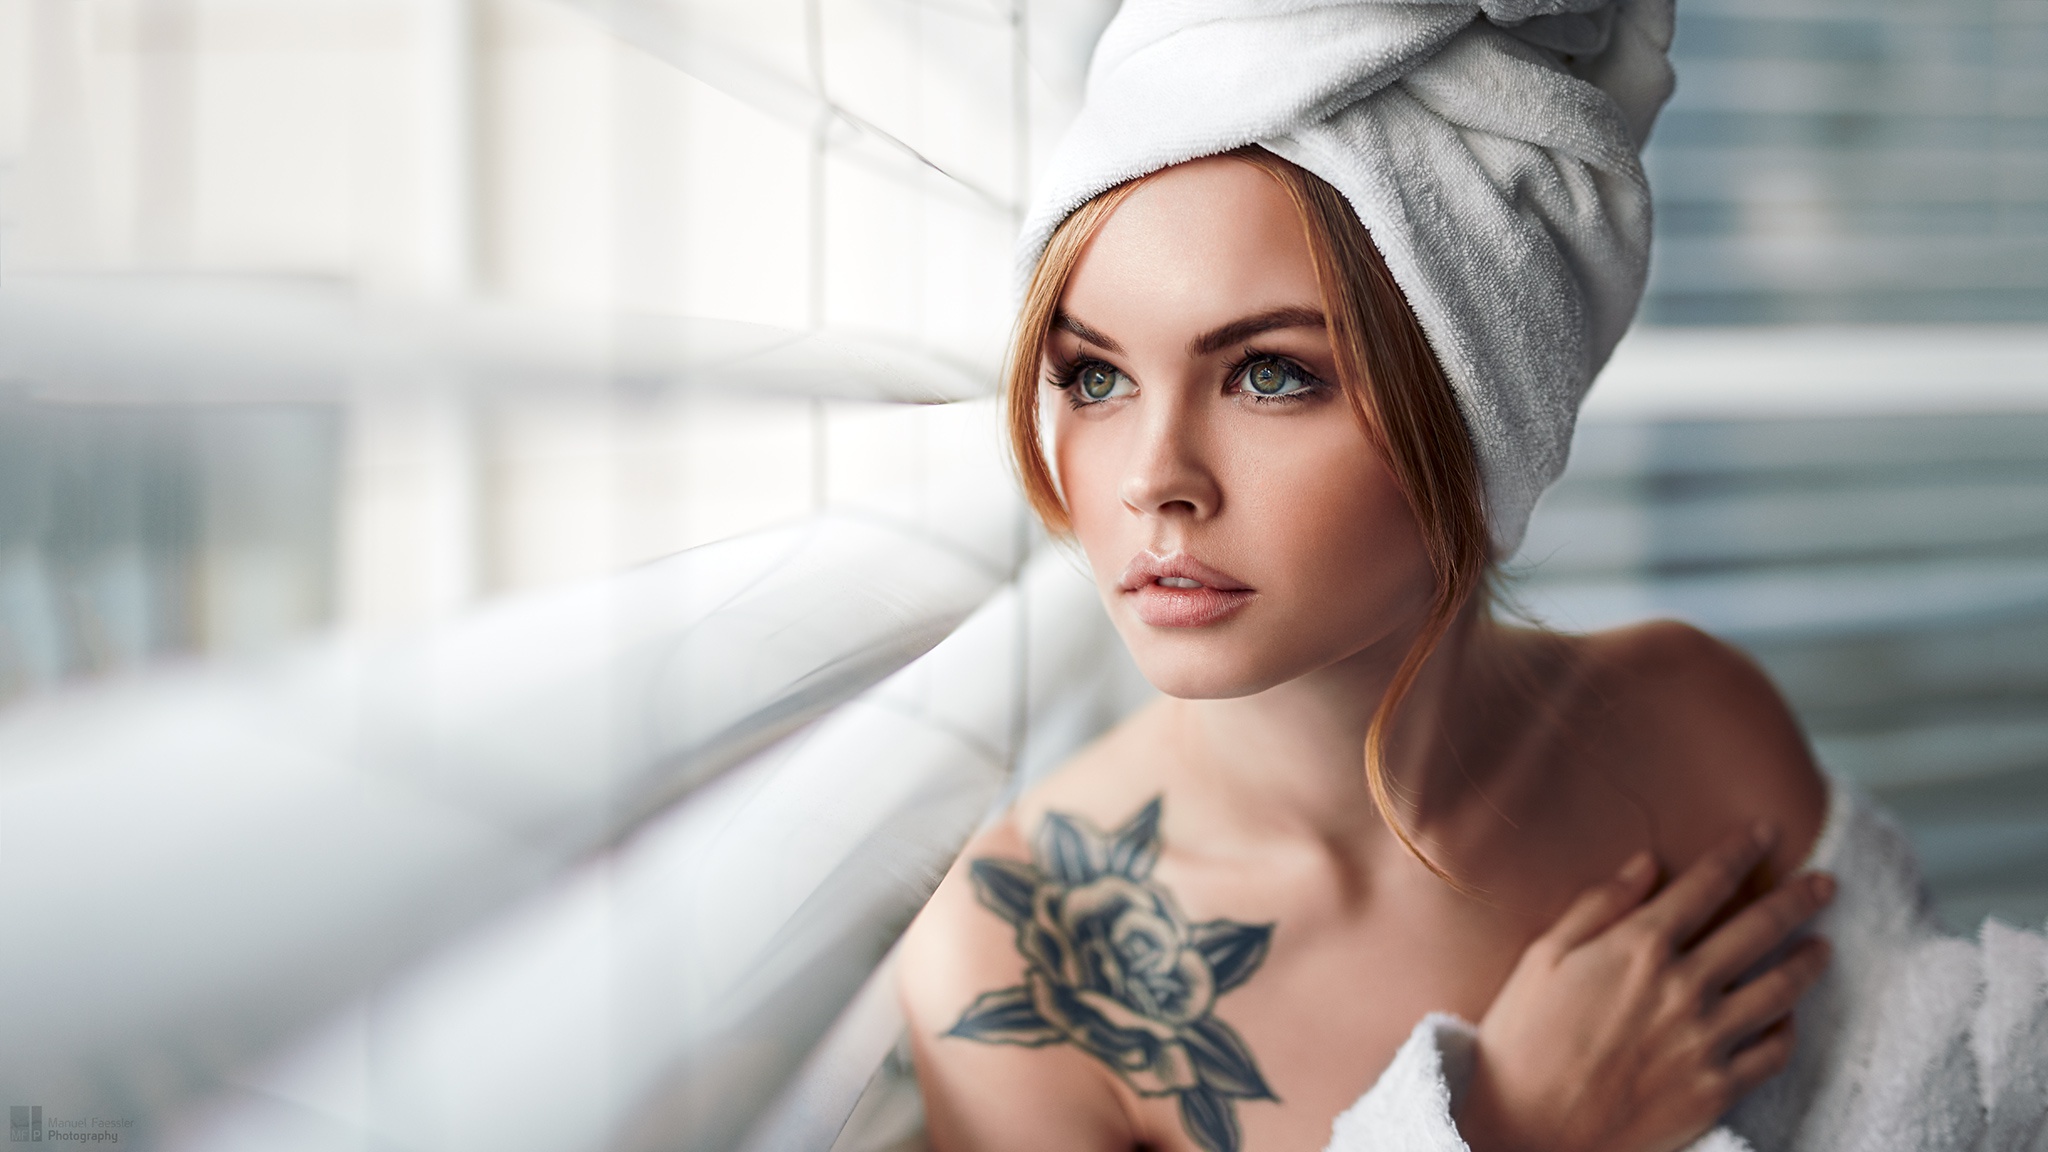 Women Model Women Indoors Indoors Inked Girls Looking Out Window Makeup Face Towel Bare 